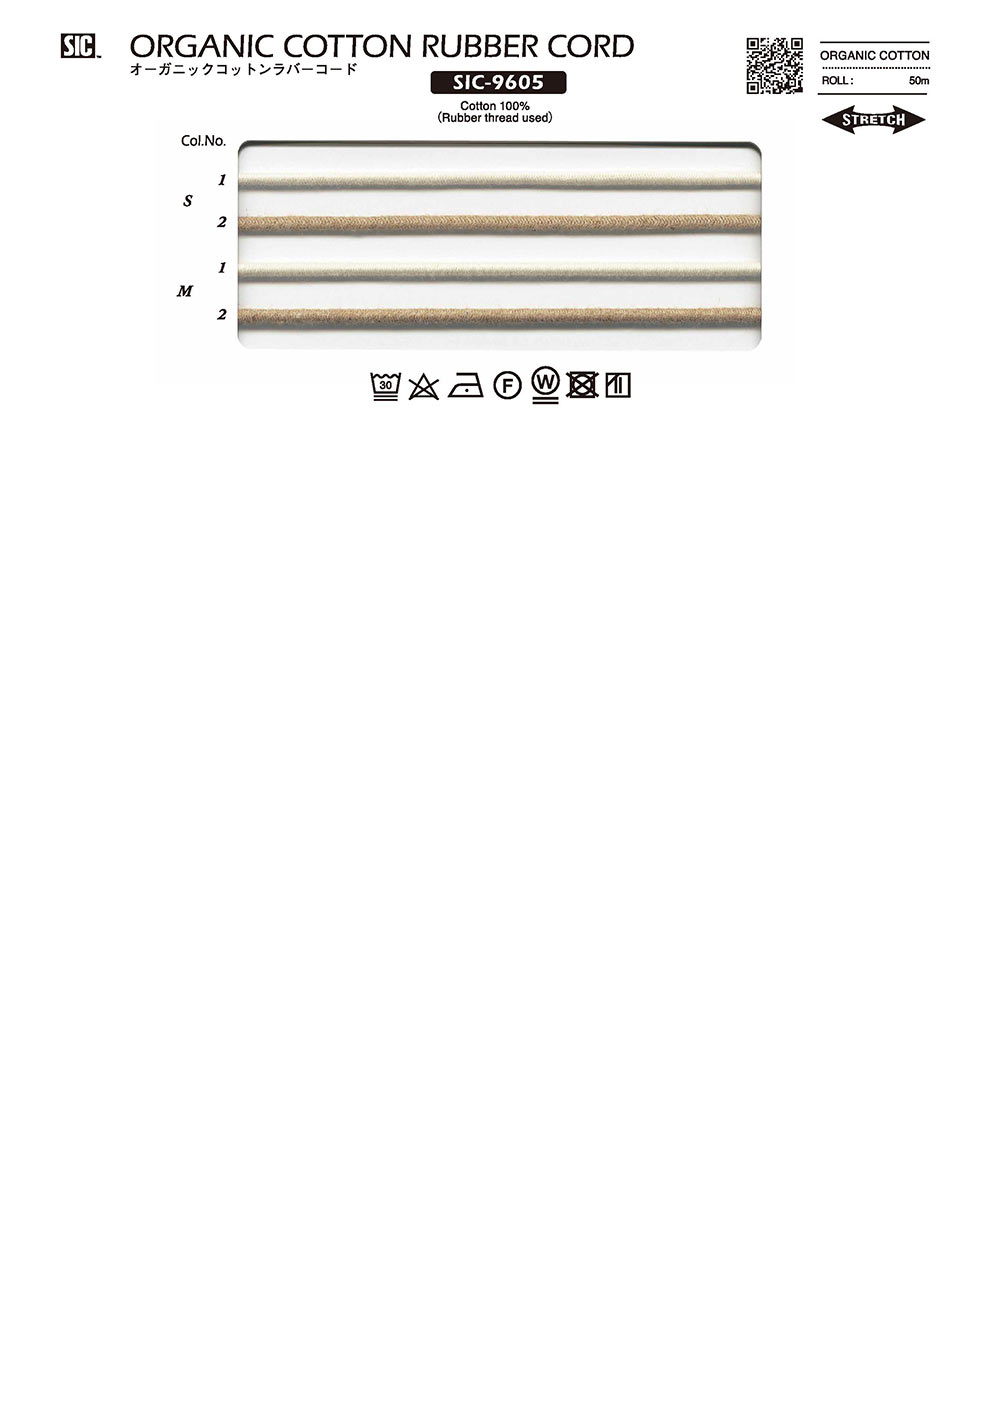 SIC-9605 Organic Cotton Rubber Cord[Elastic Band] SHINDO(SIC)